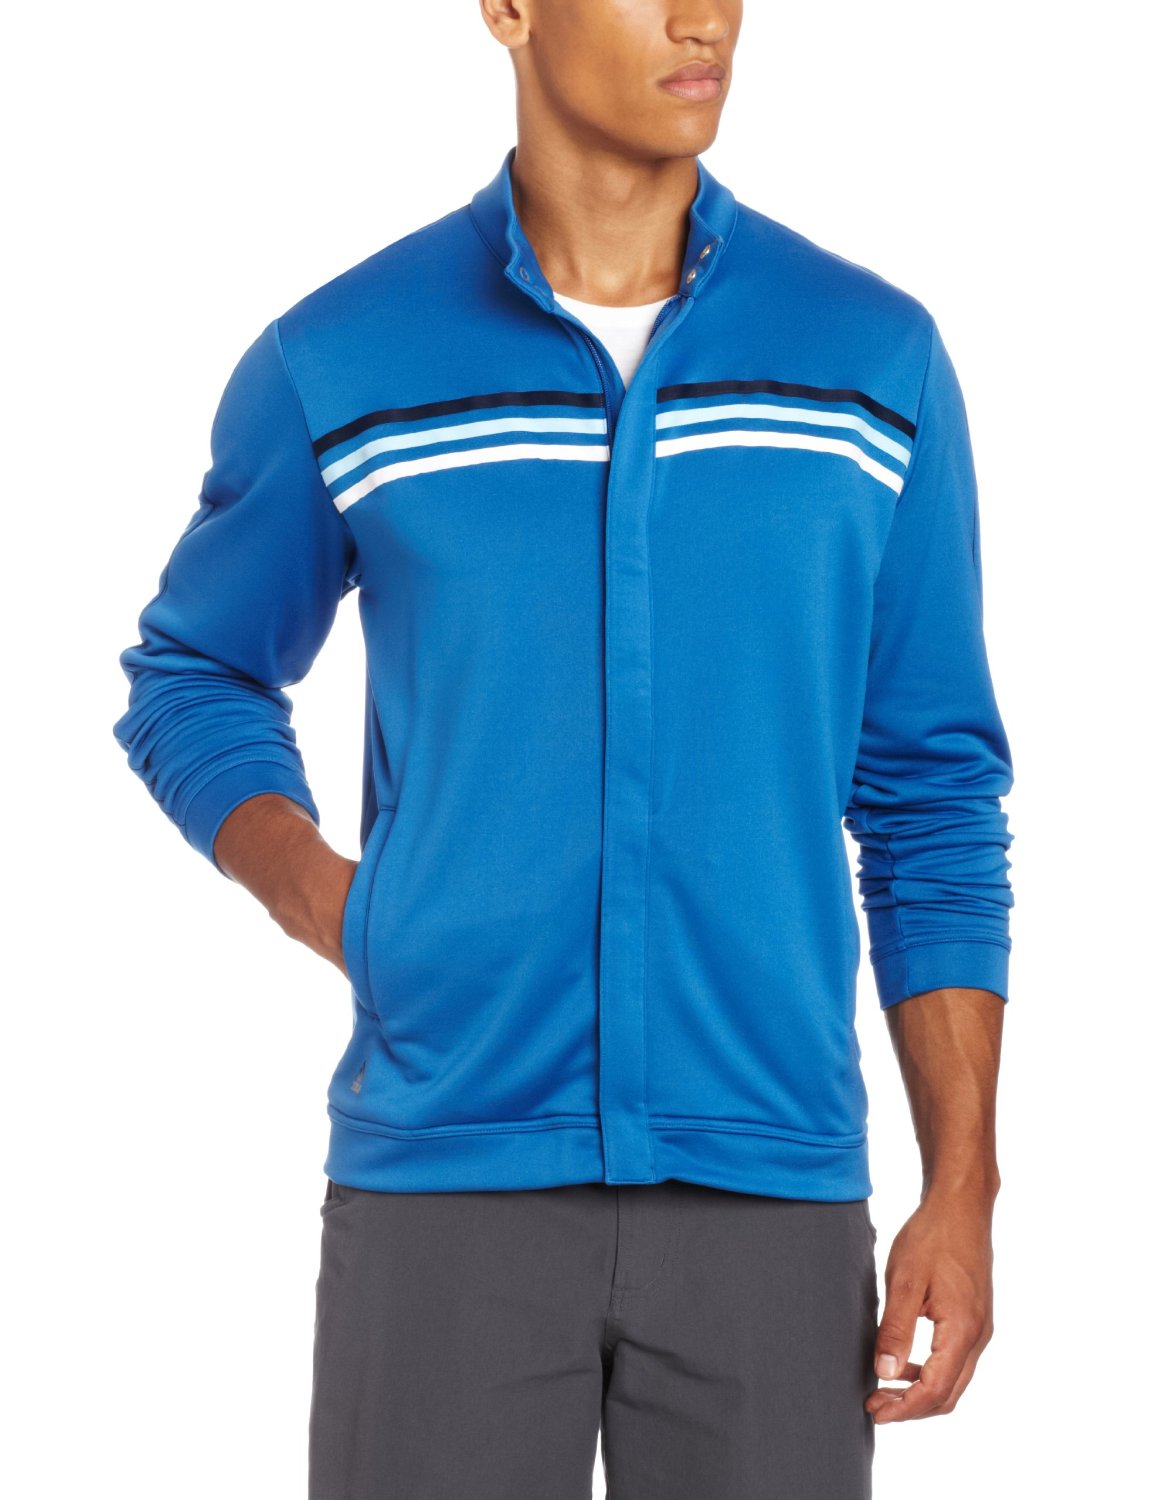 ClimaLite Long Sleeve/Layering 3 Strip Golf Jackets